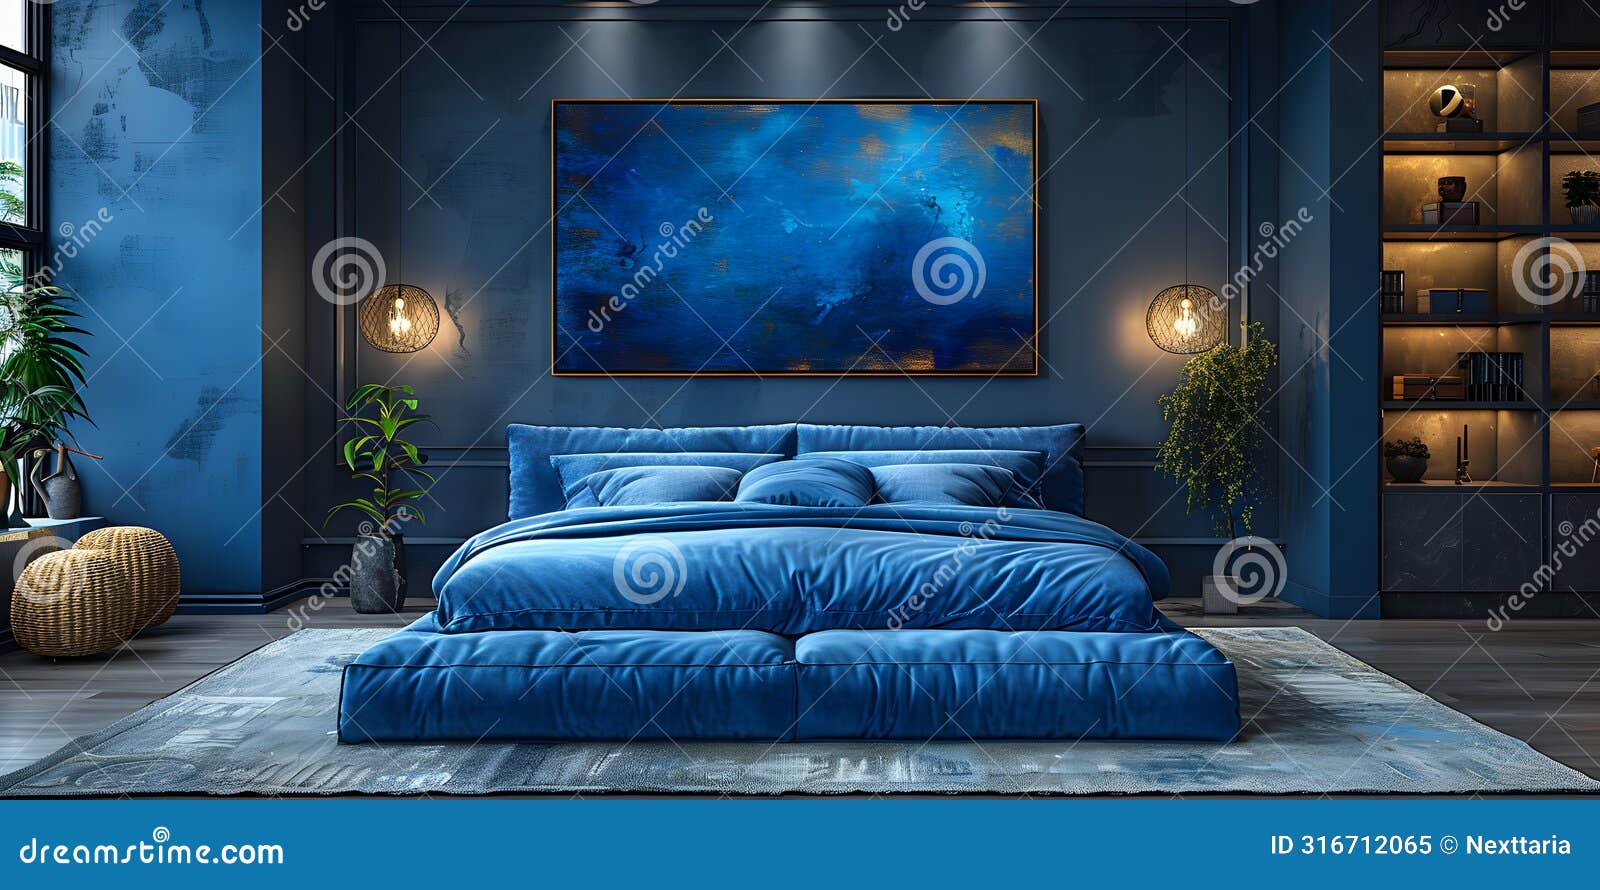 cozy retreat: minimalist bedchamber with soft light